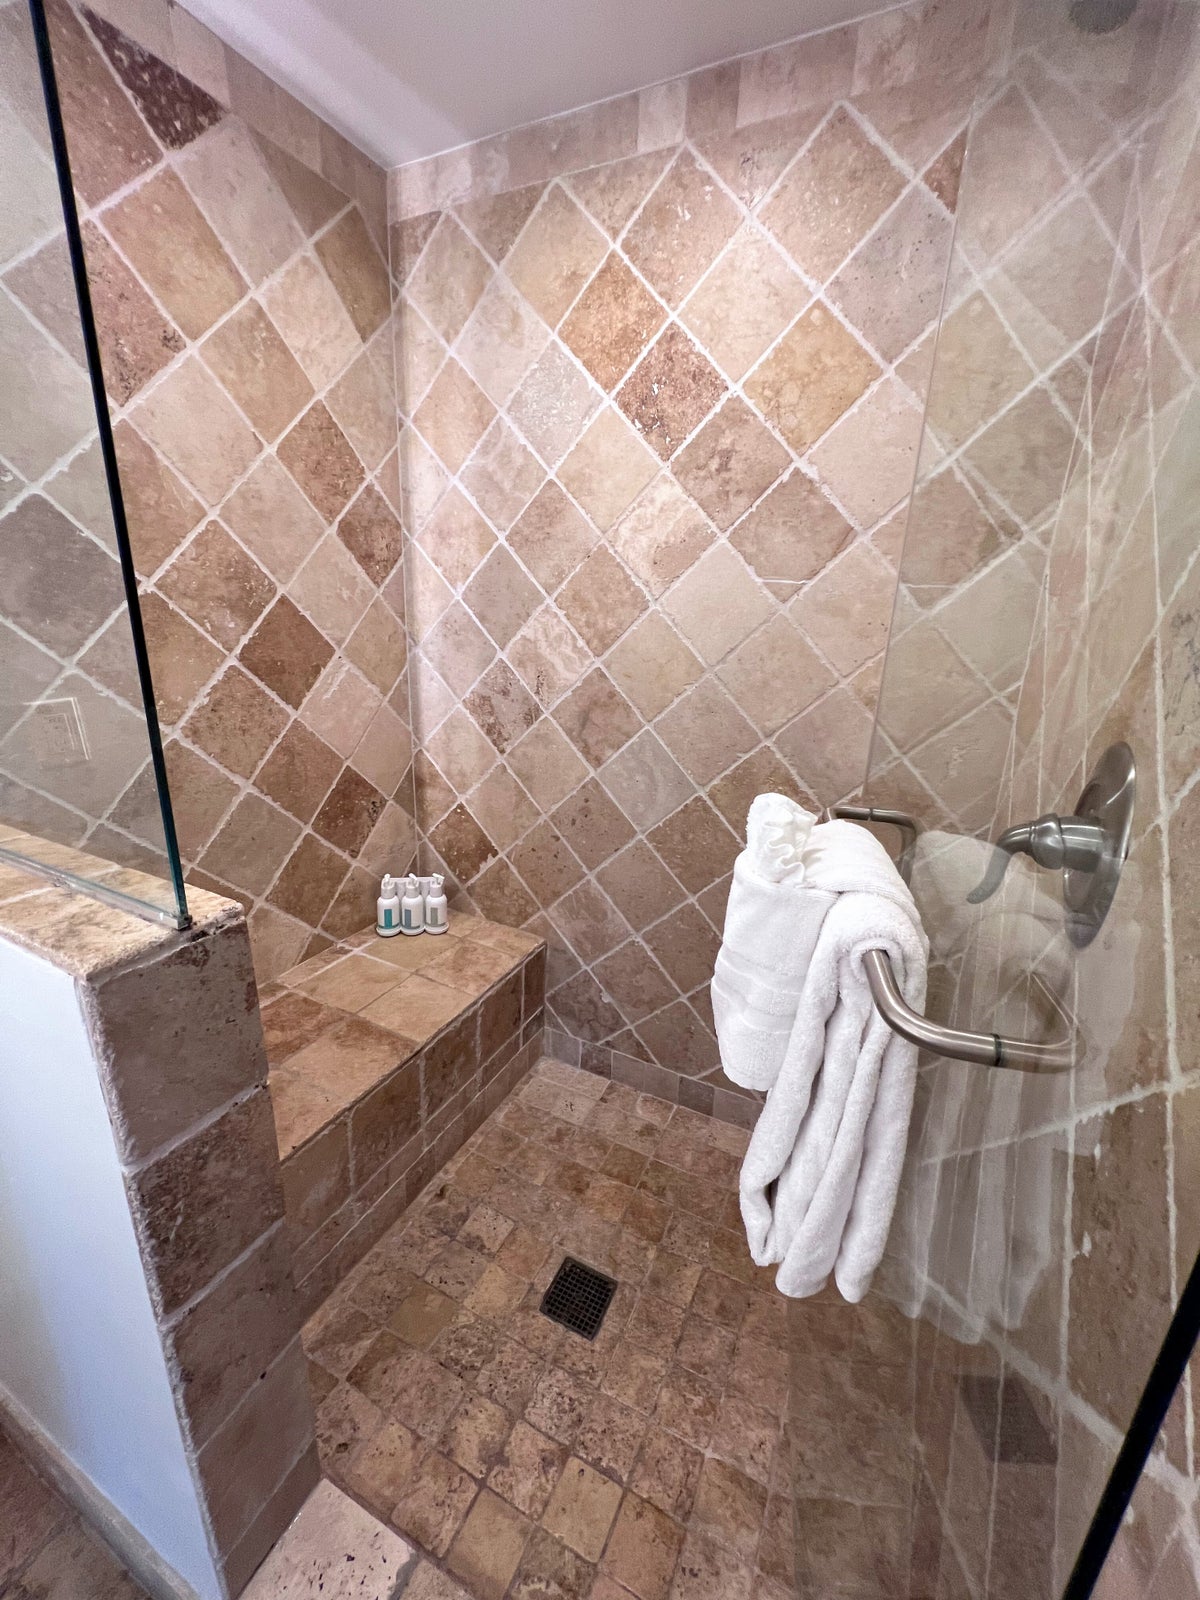 Hawks Cay Resort guest room shower